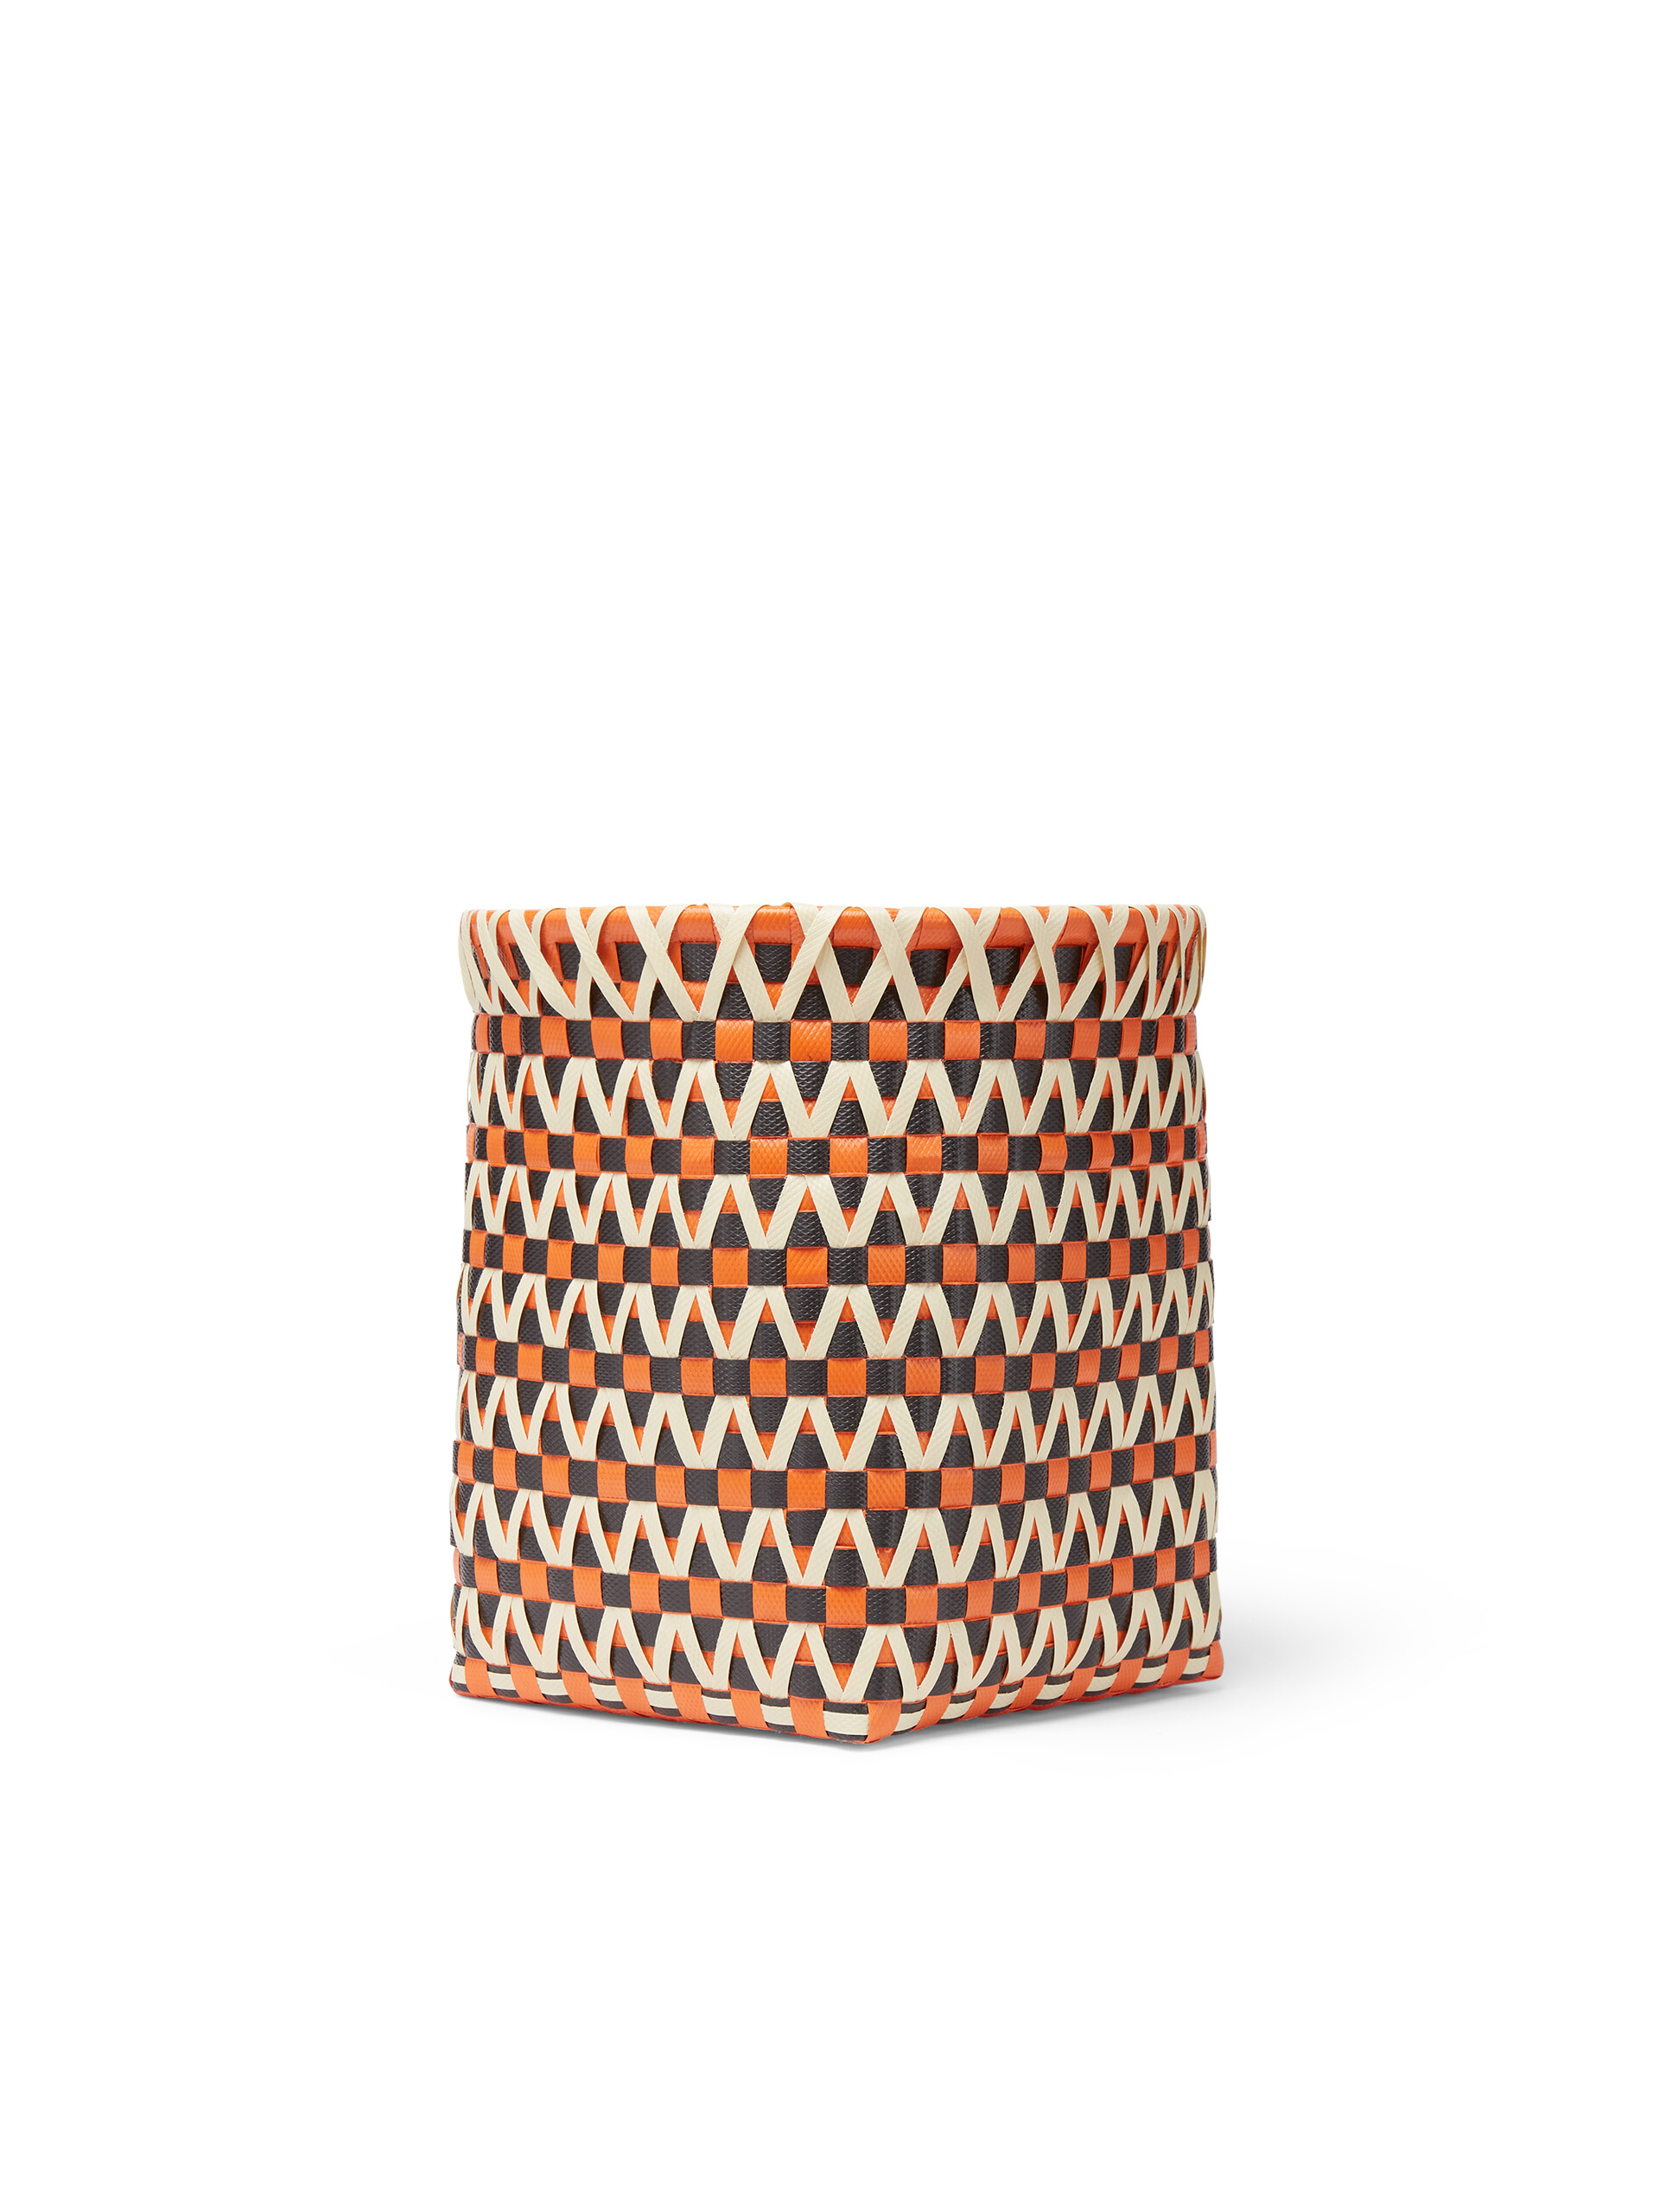 MARNI MARKET basket in orange black and white woven PVC - Accessories - Image 2